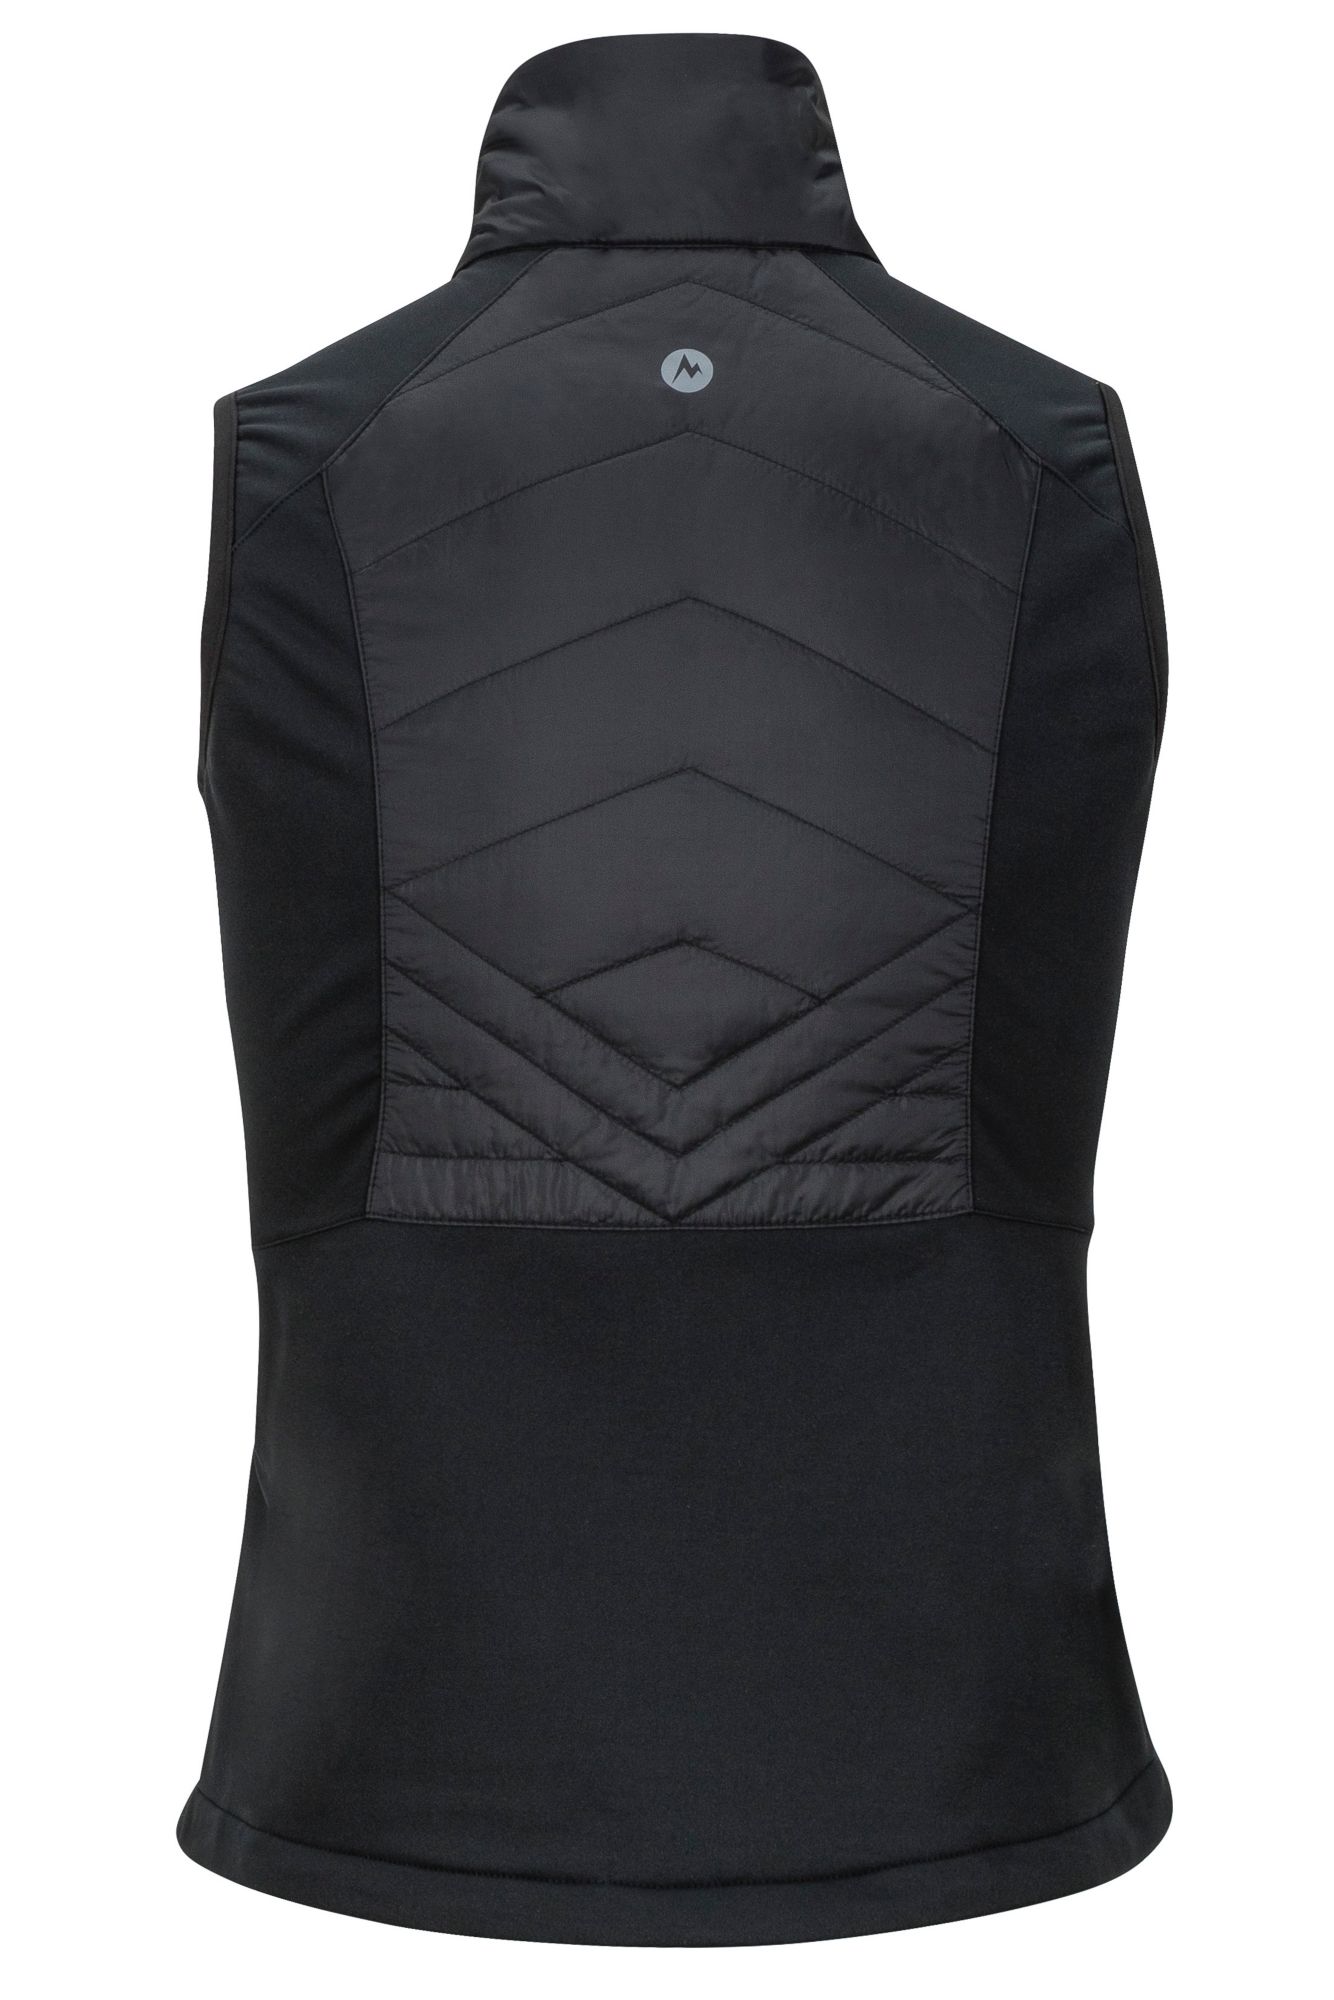 Details about   Smith & Wesson Women's Technical Hybrid Vest 